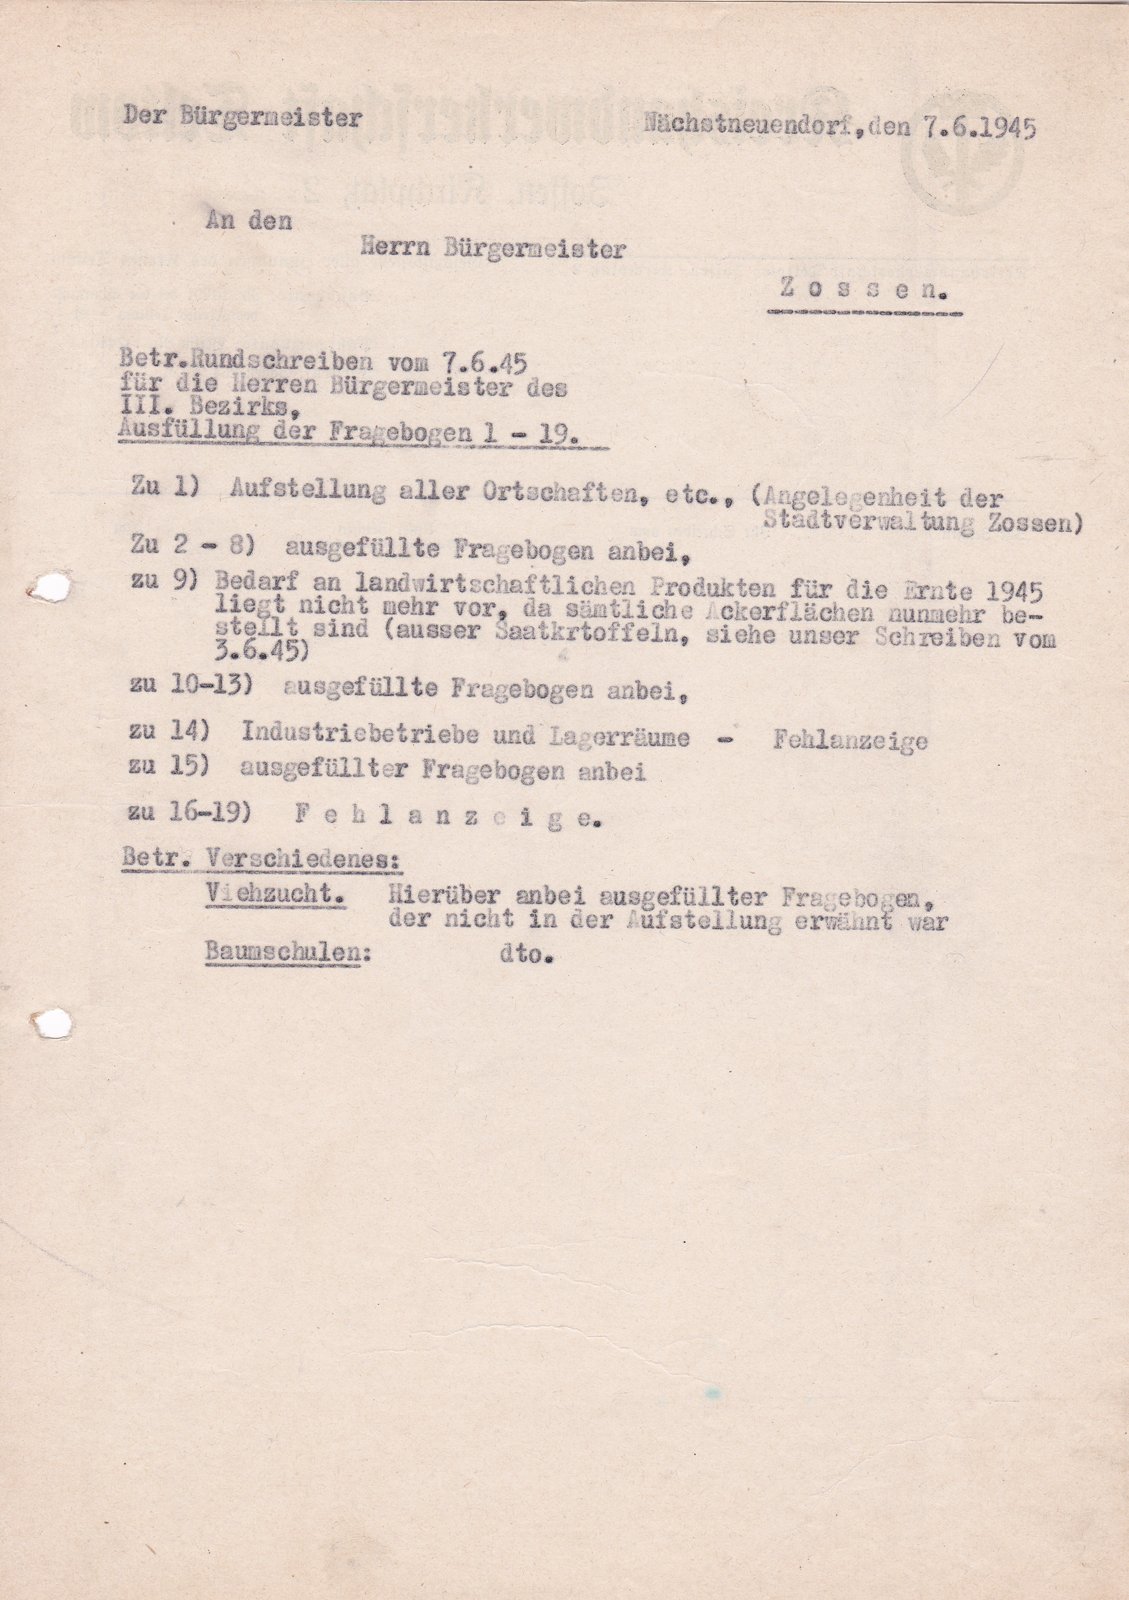 BM Nächst Neuendort, BM Zossen, 07.06.1945 (Heimatverein "Alter Krug" Zossen e.V. CC BY-NC-SA)